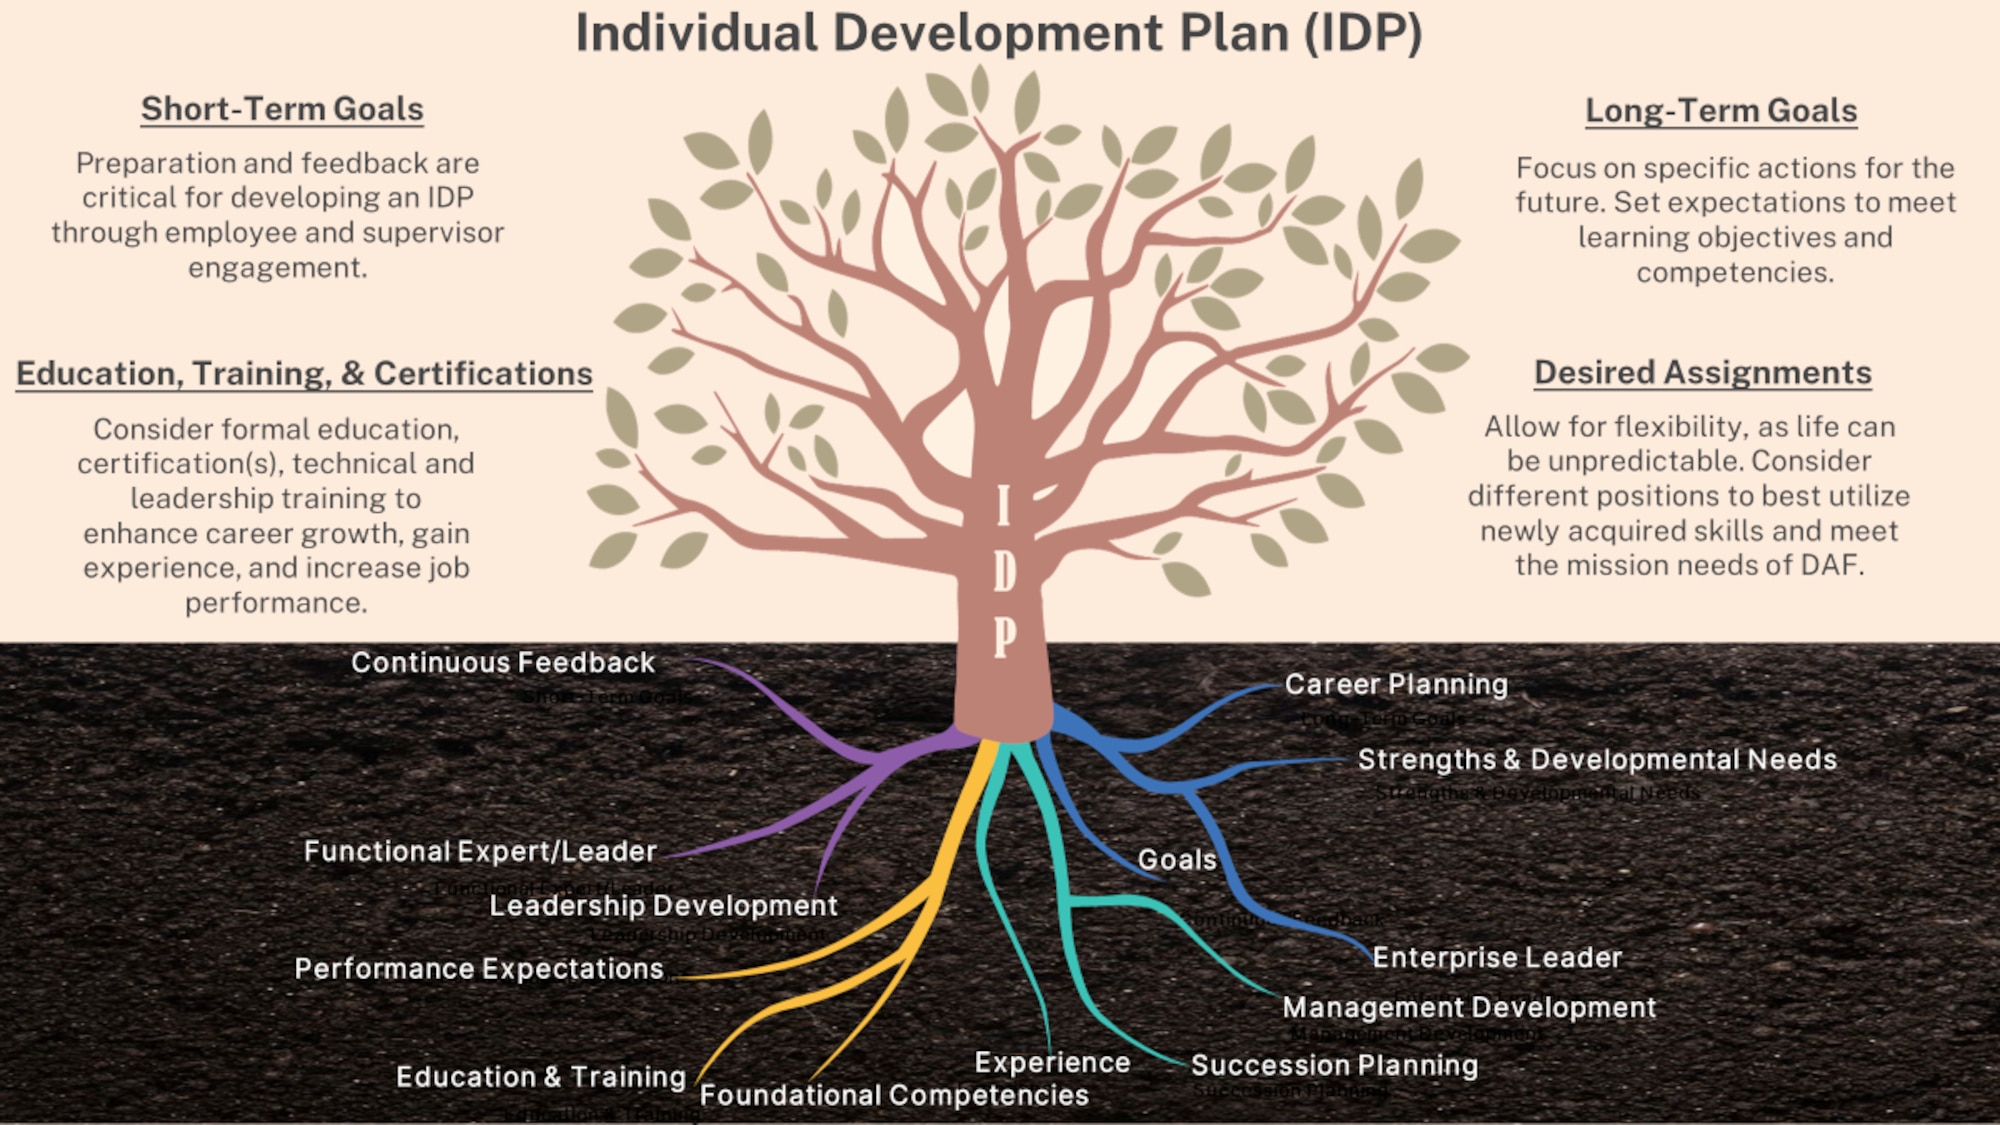 Individual Development Plan (IDP)